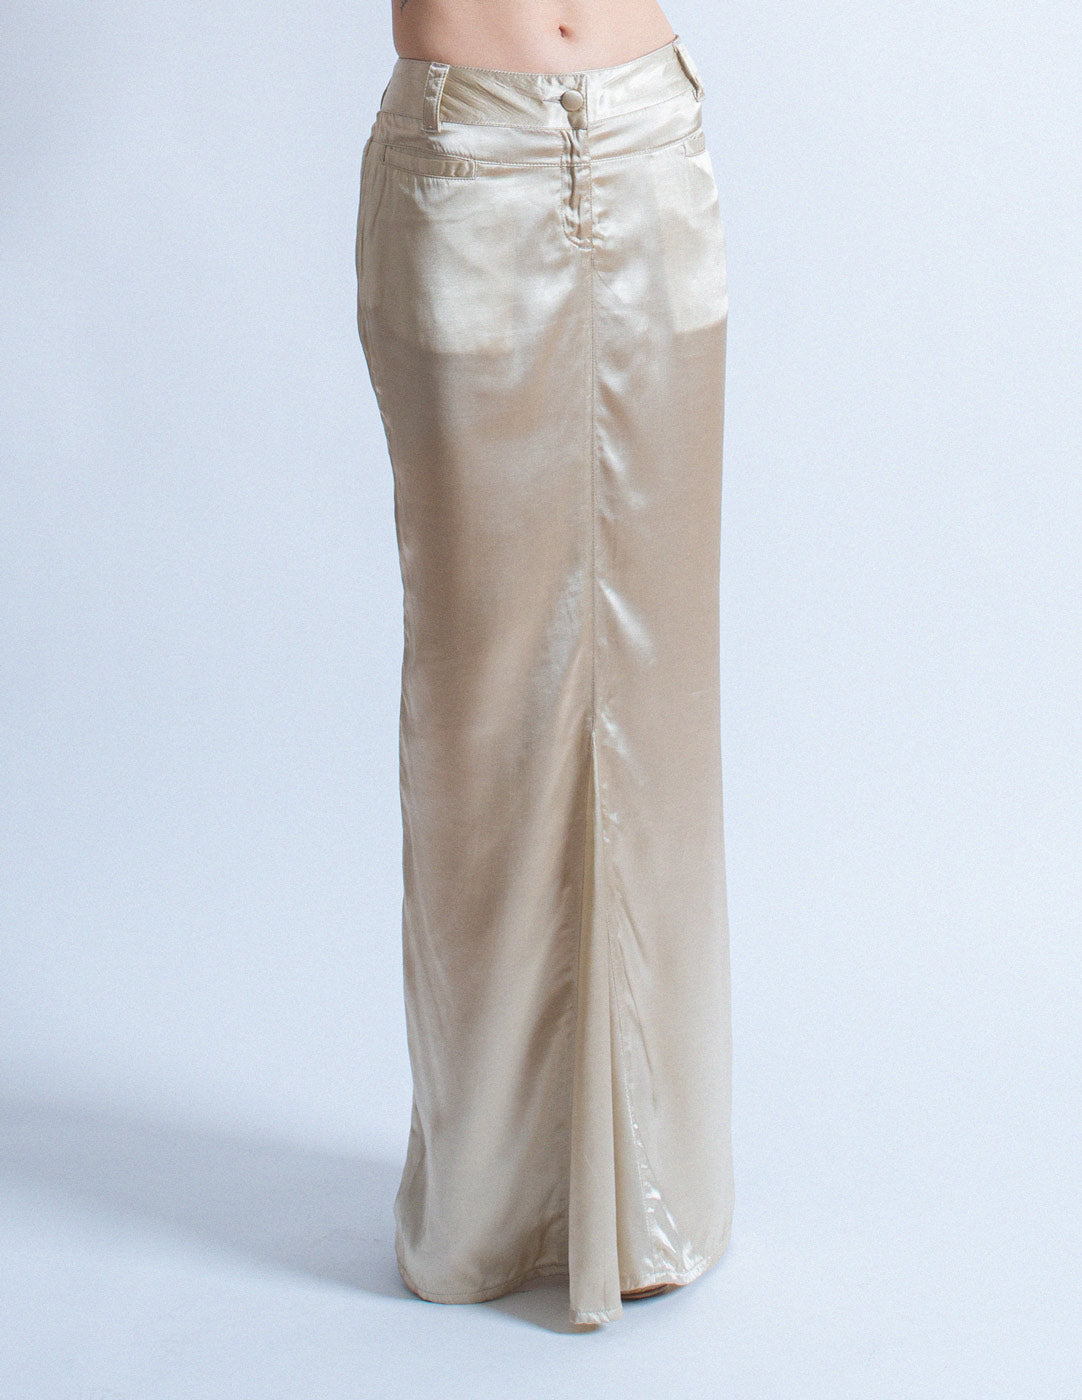 Jean Paul Gaultier vintage gold maxi skirt front detail